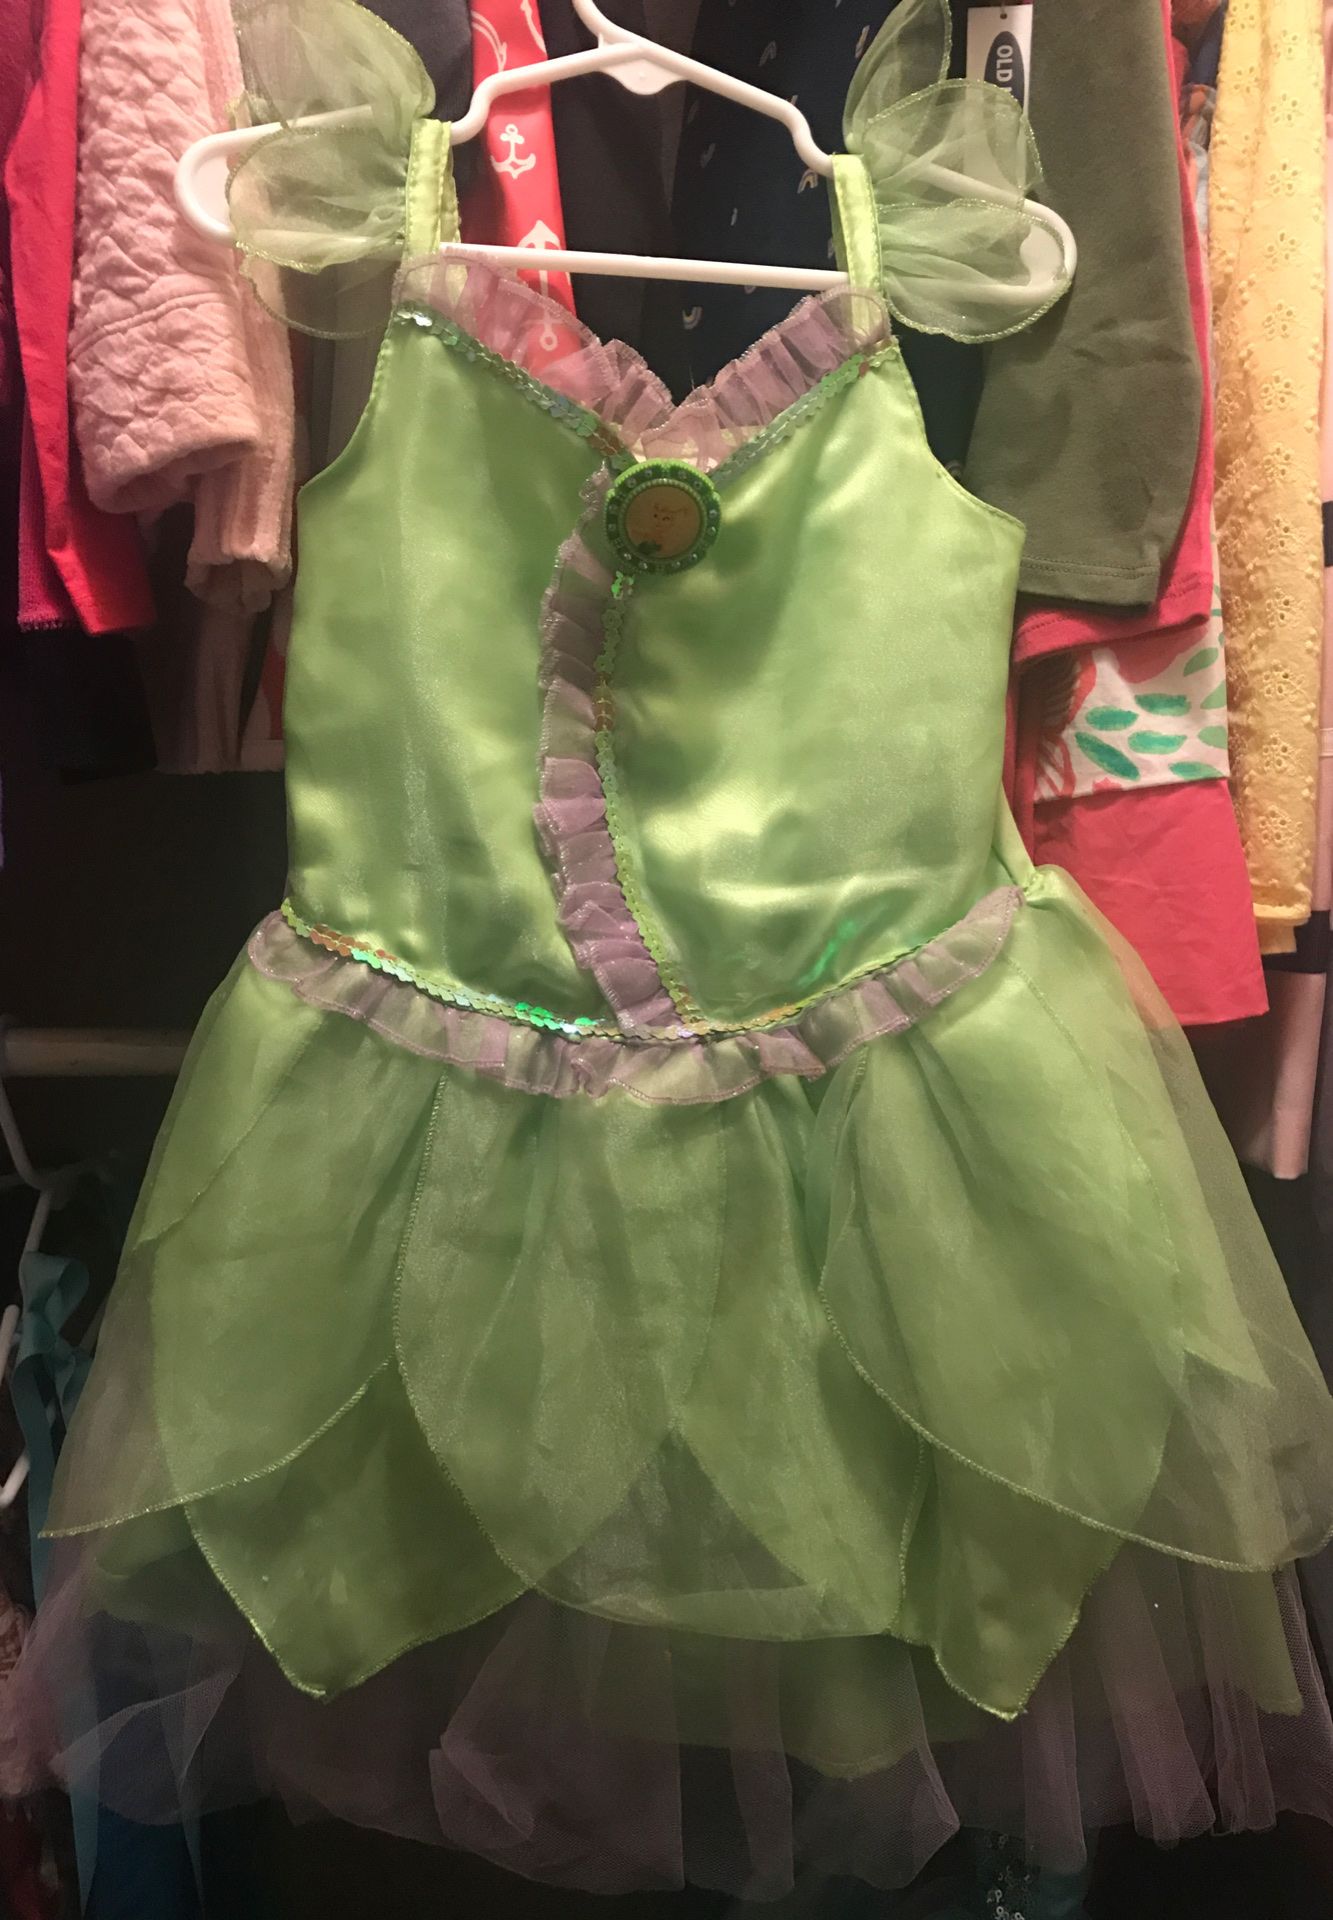 Tinkerbell dress